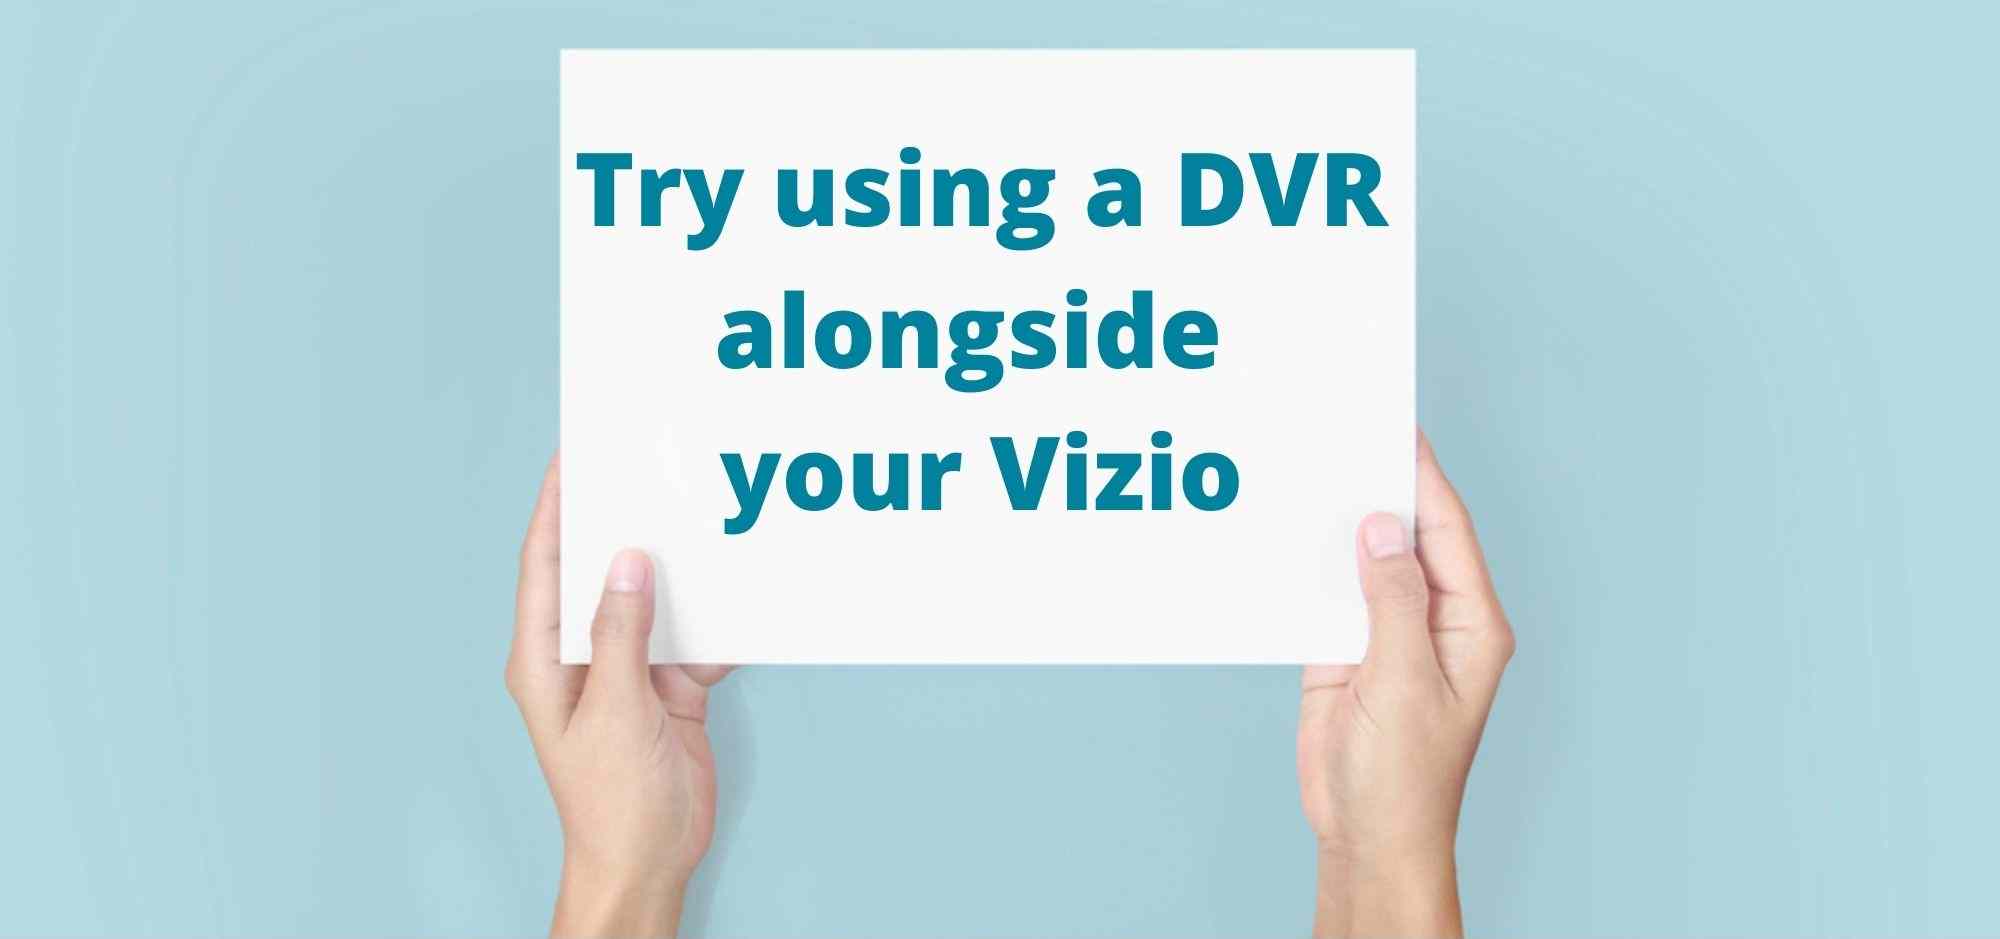 Try using a DVR alongside your Vizio